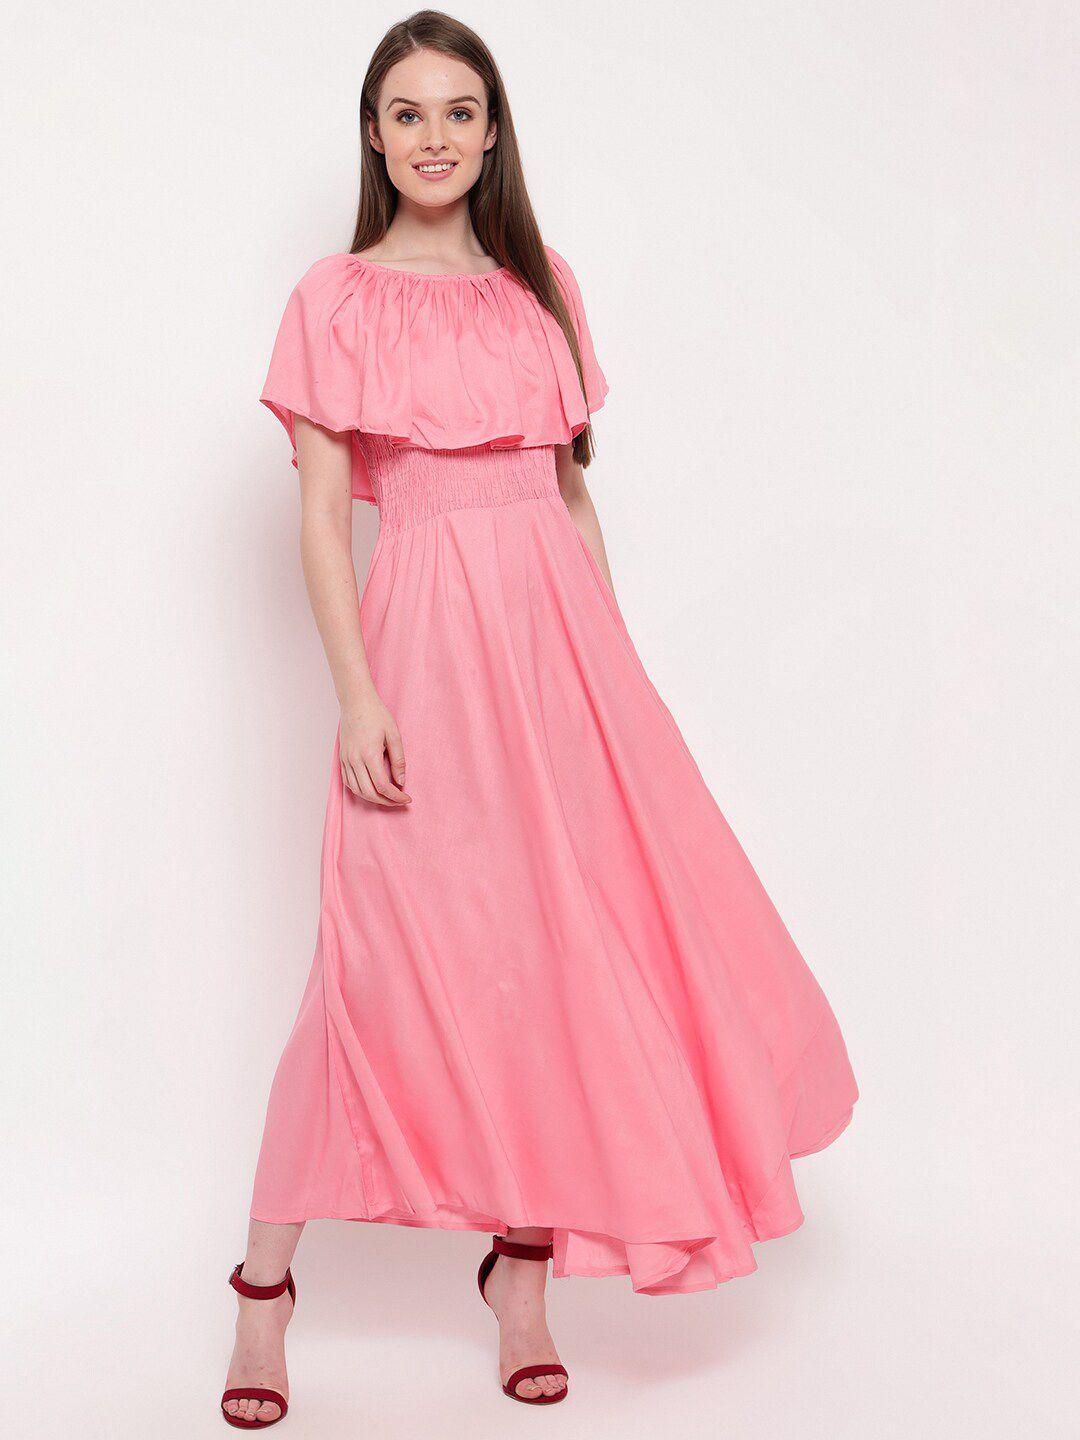 baesd pink dress